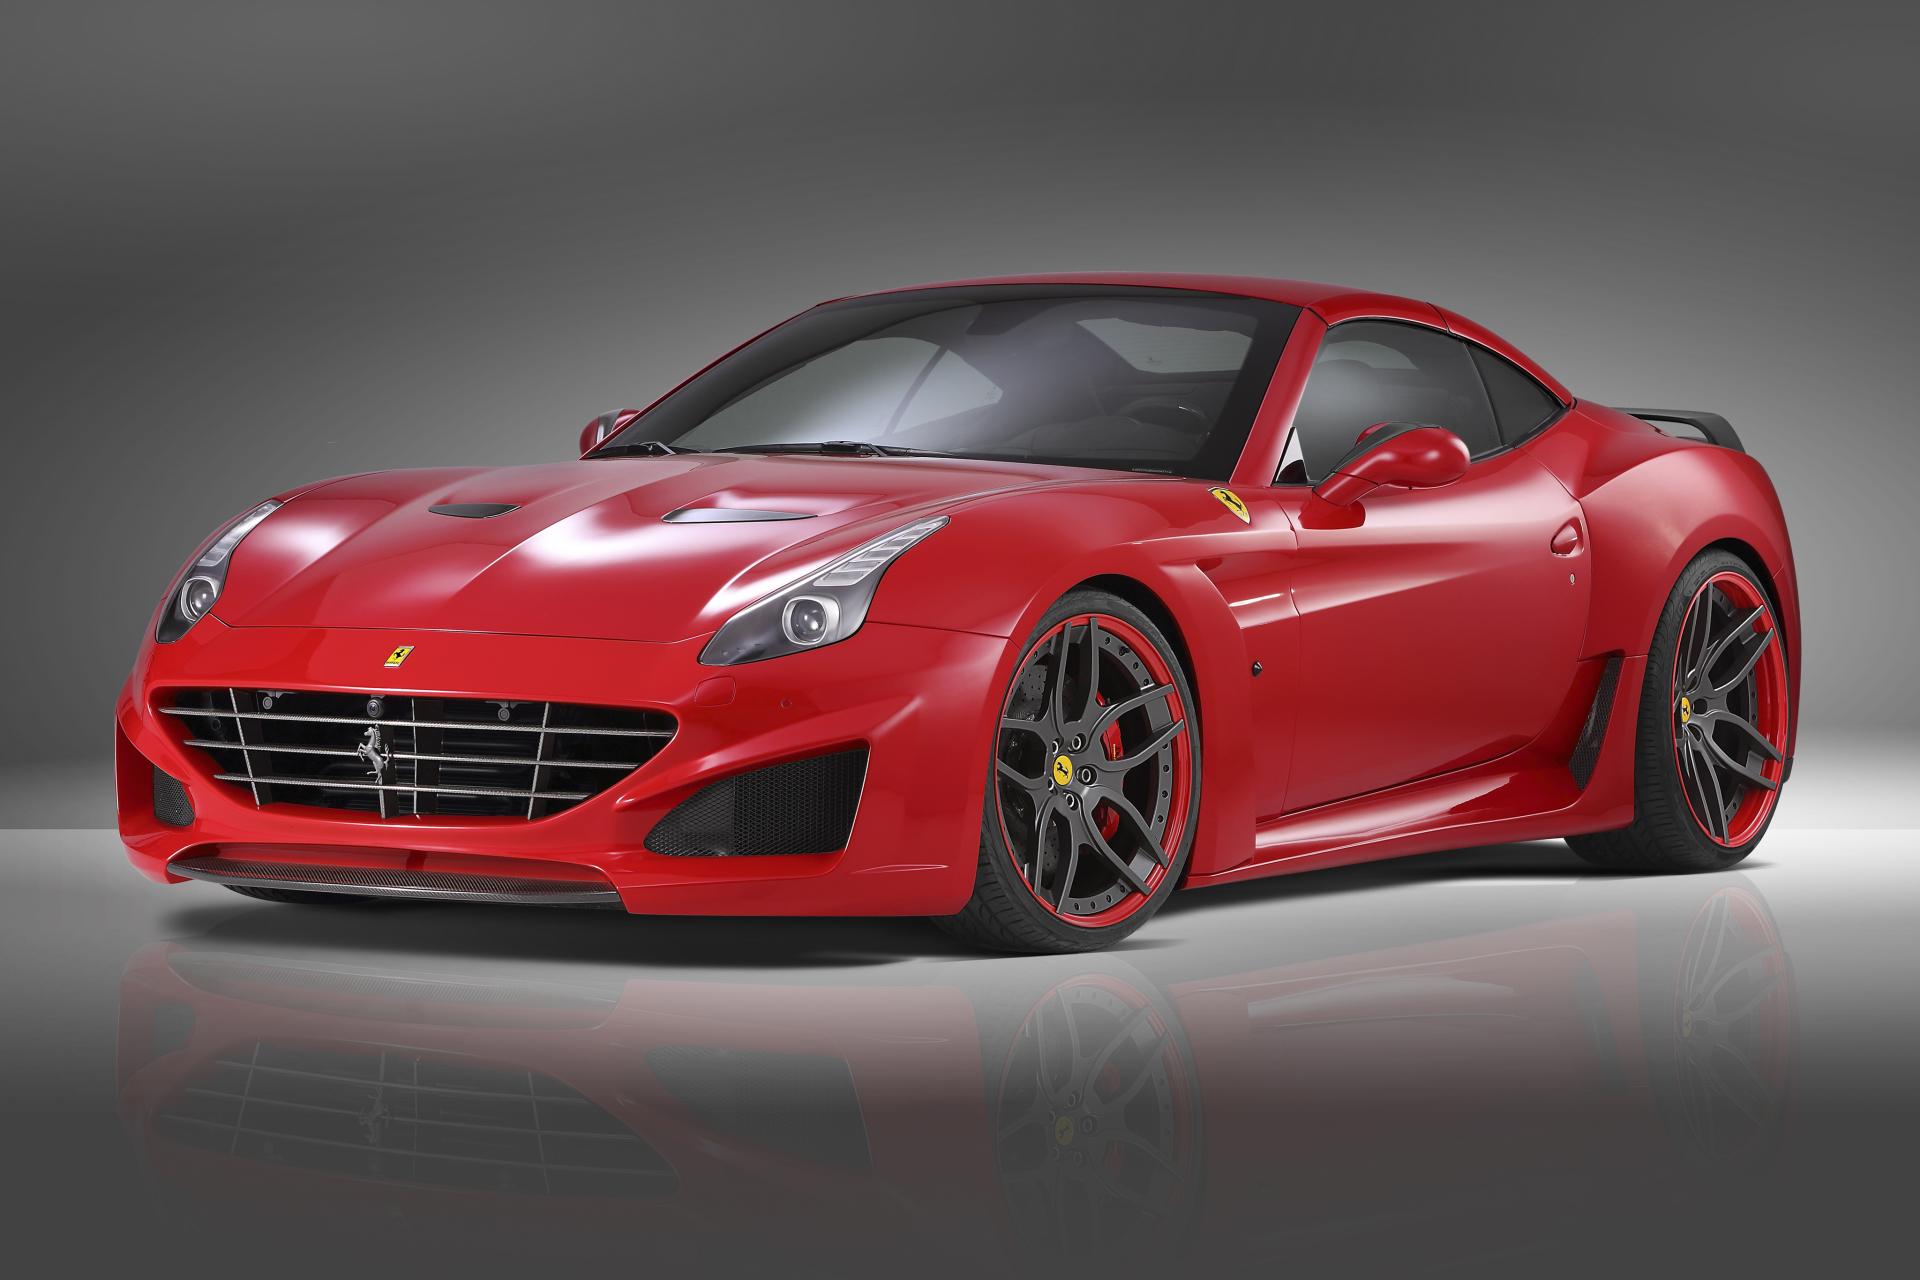 Ferrari California T N-Largo at 1600 x 1200 size wallpapers HD quality